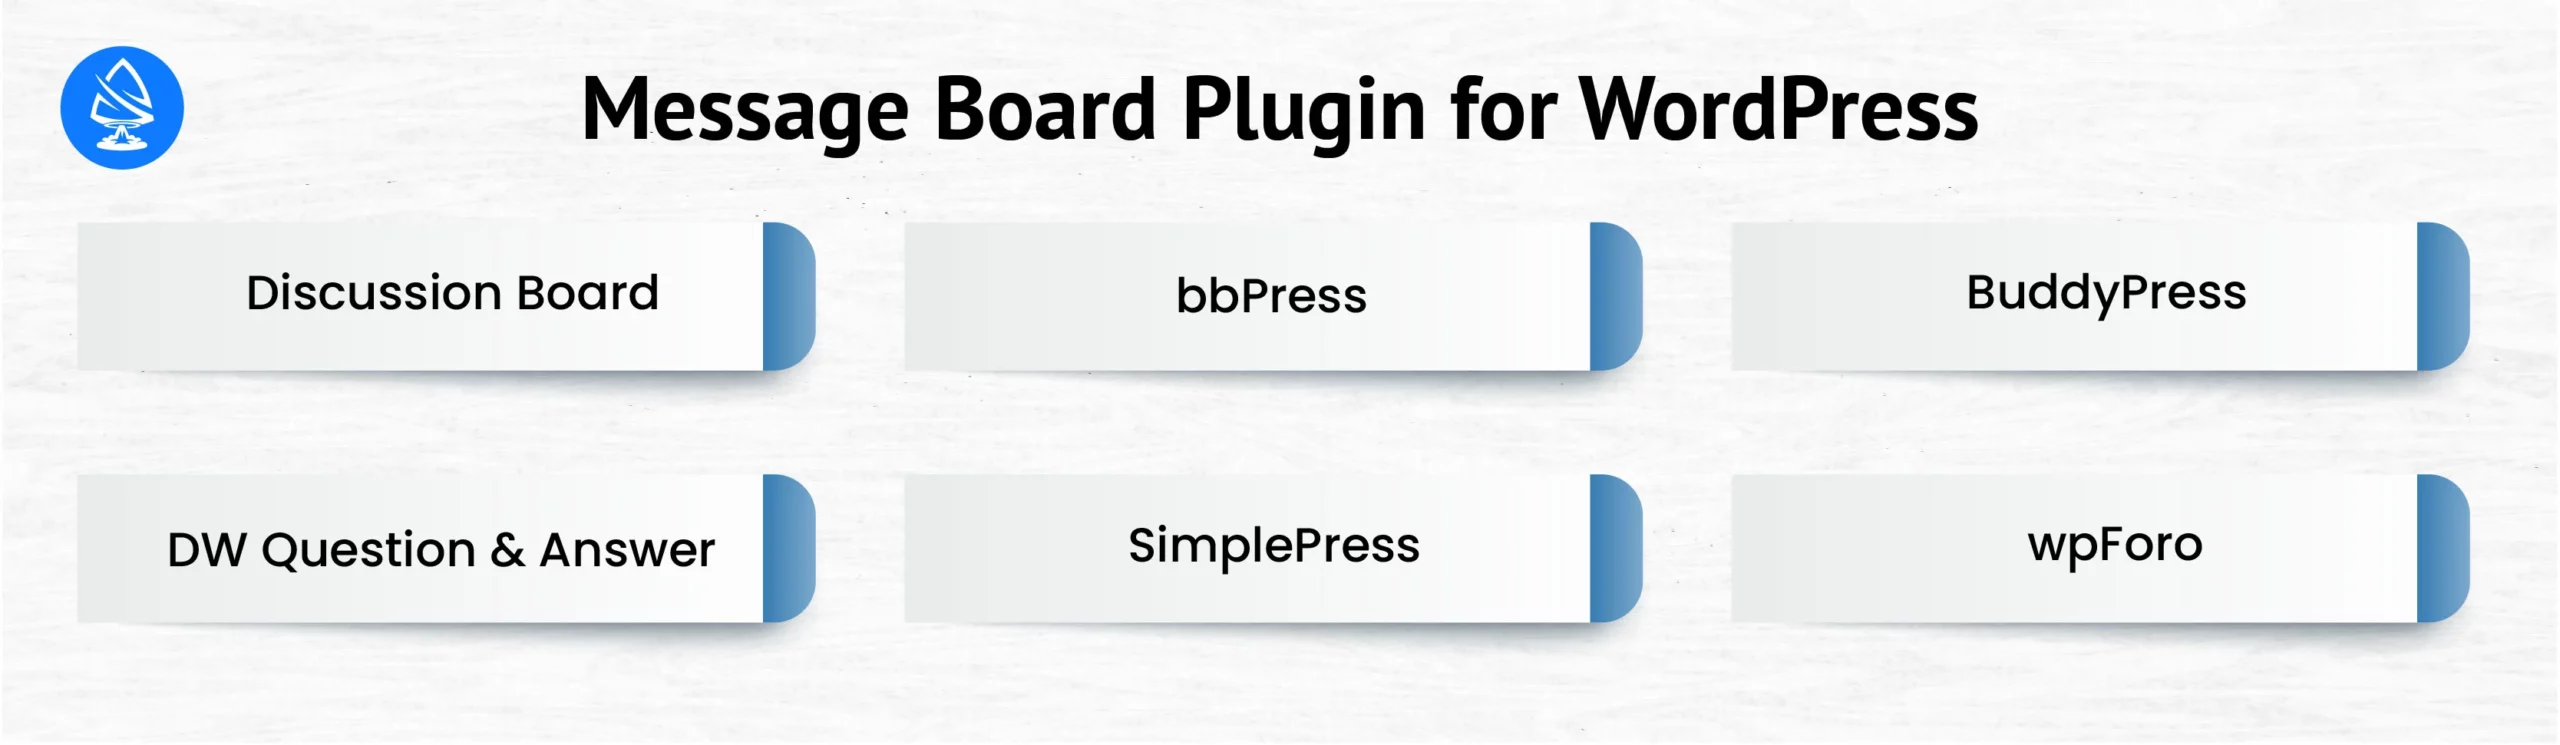 Message Board Plugin for WordPress